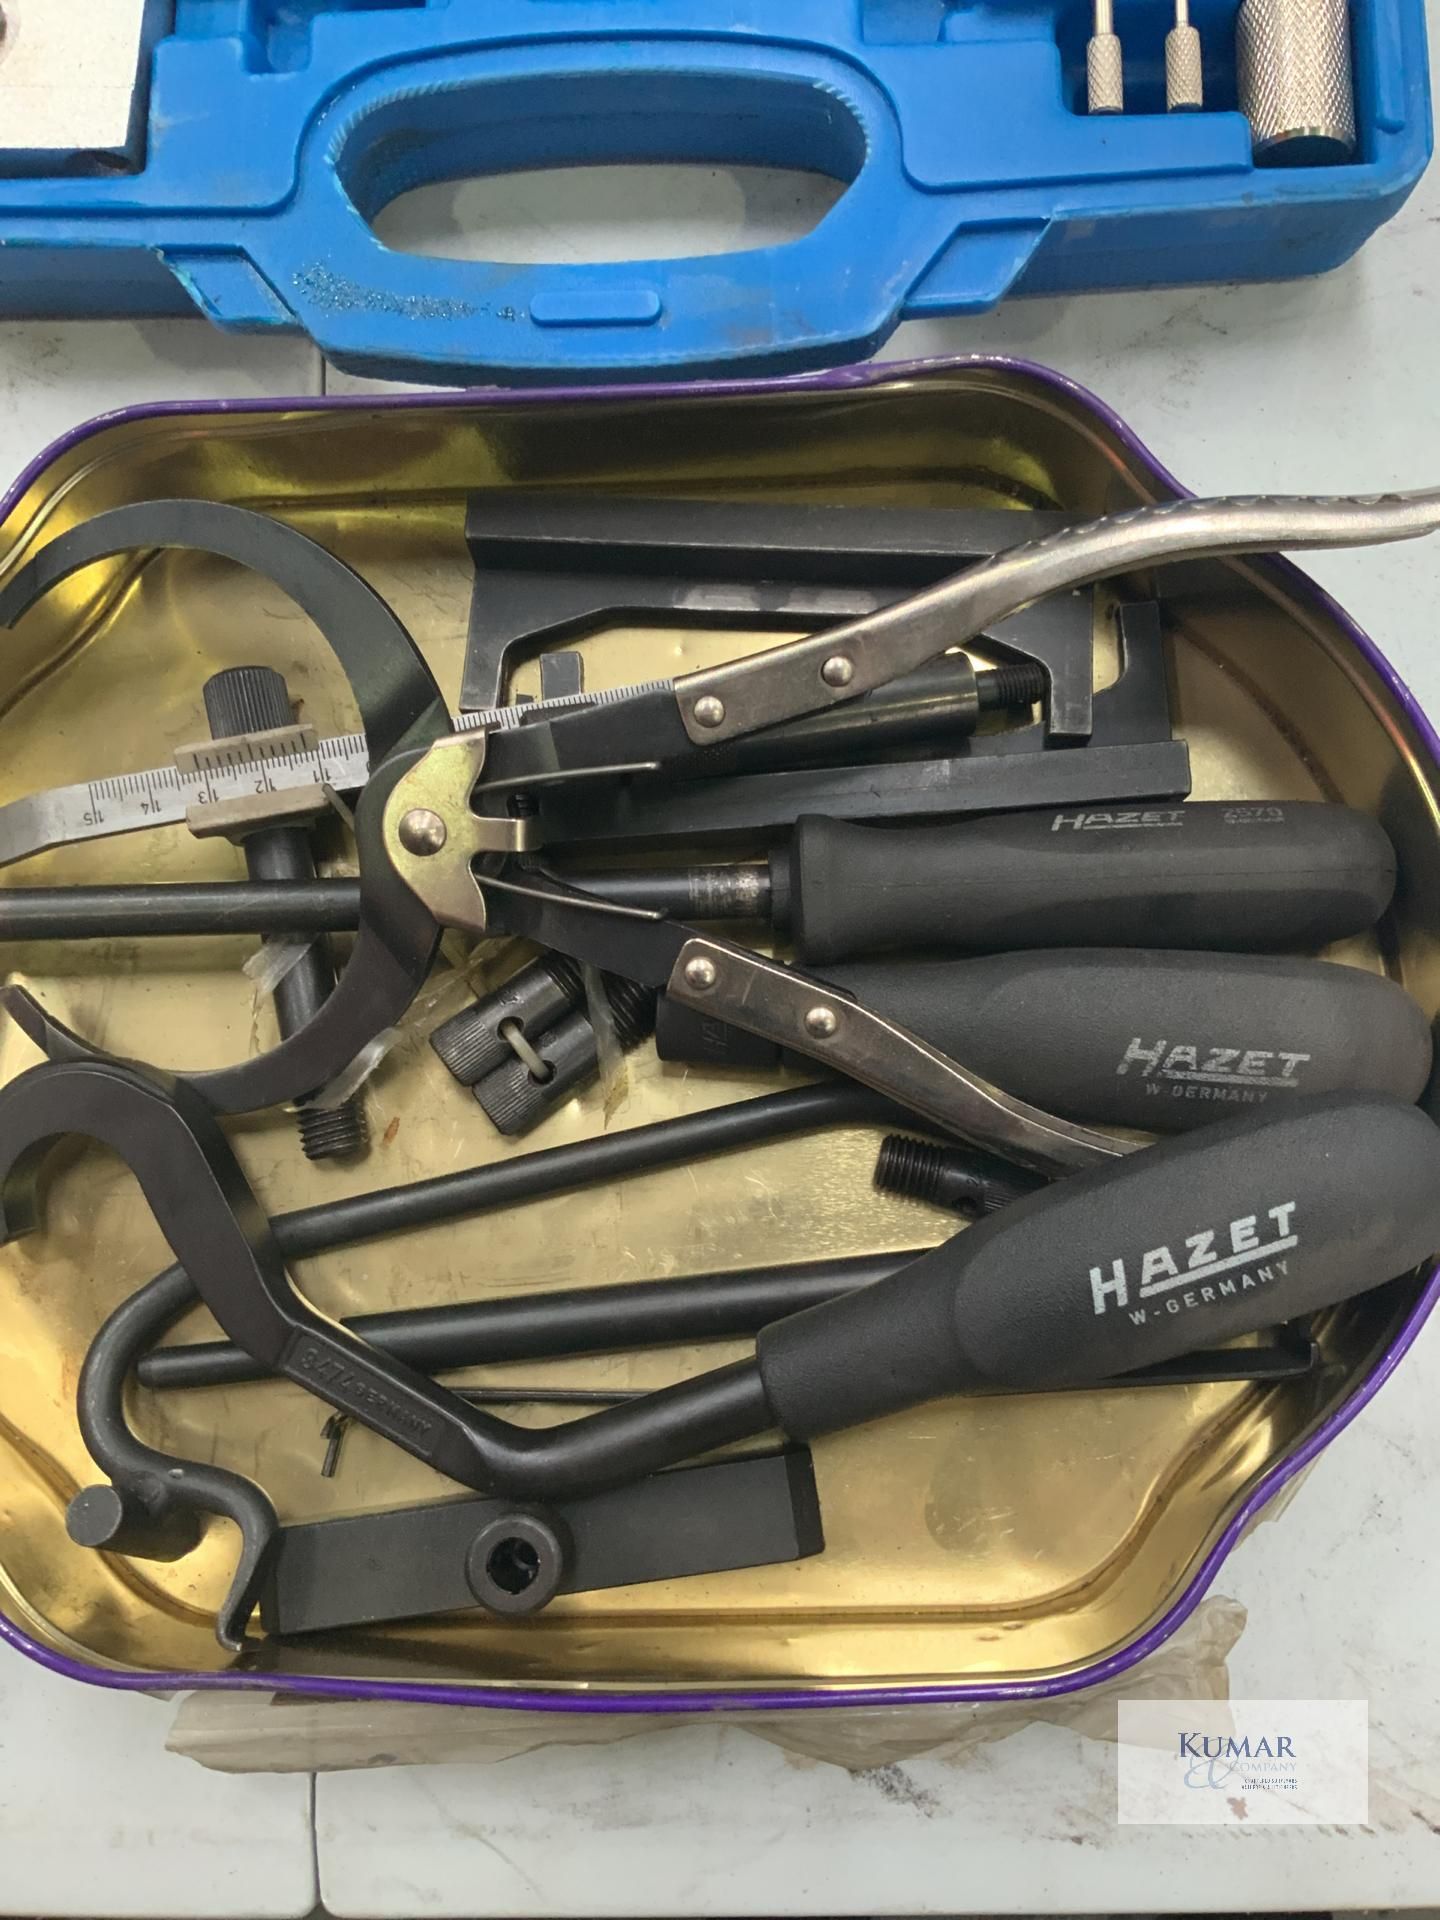 Hazet Specialist tools - Image 3 of 4